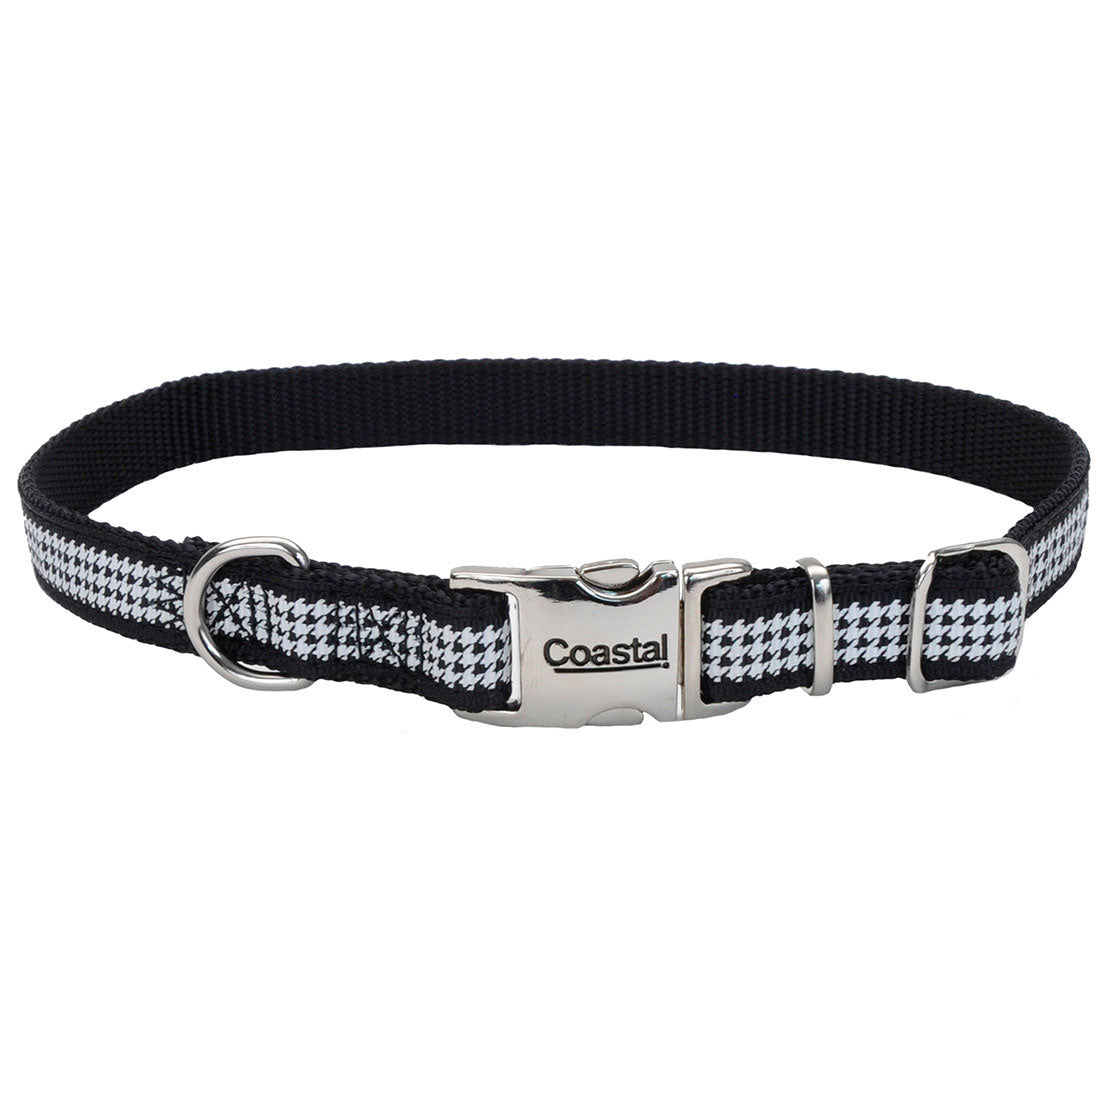 Coastal Ribbon Adjustable Dog Collar with Metal Clip Red Paw XS